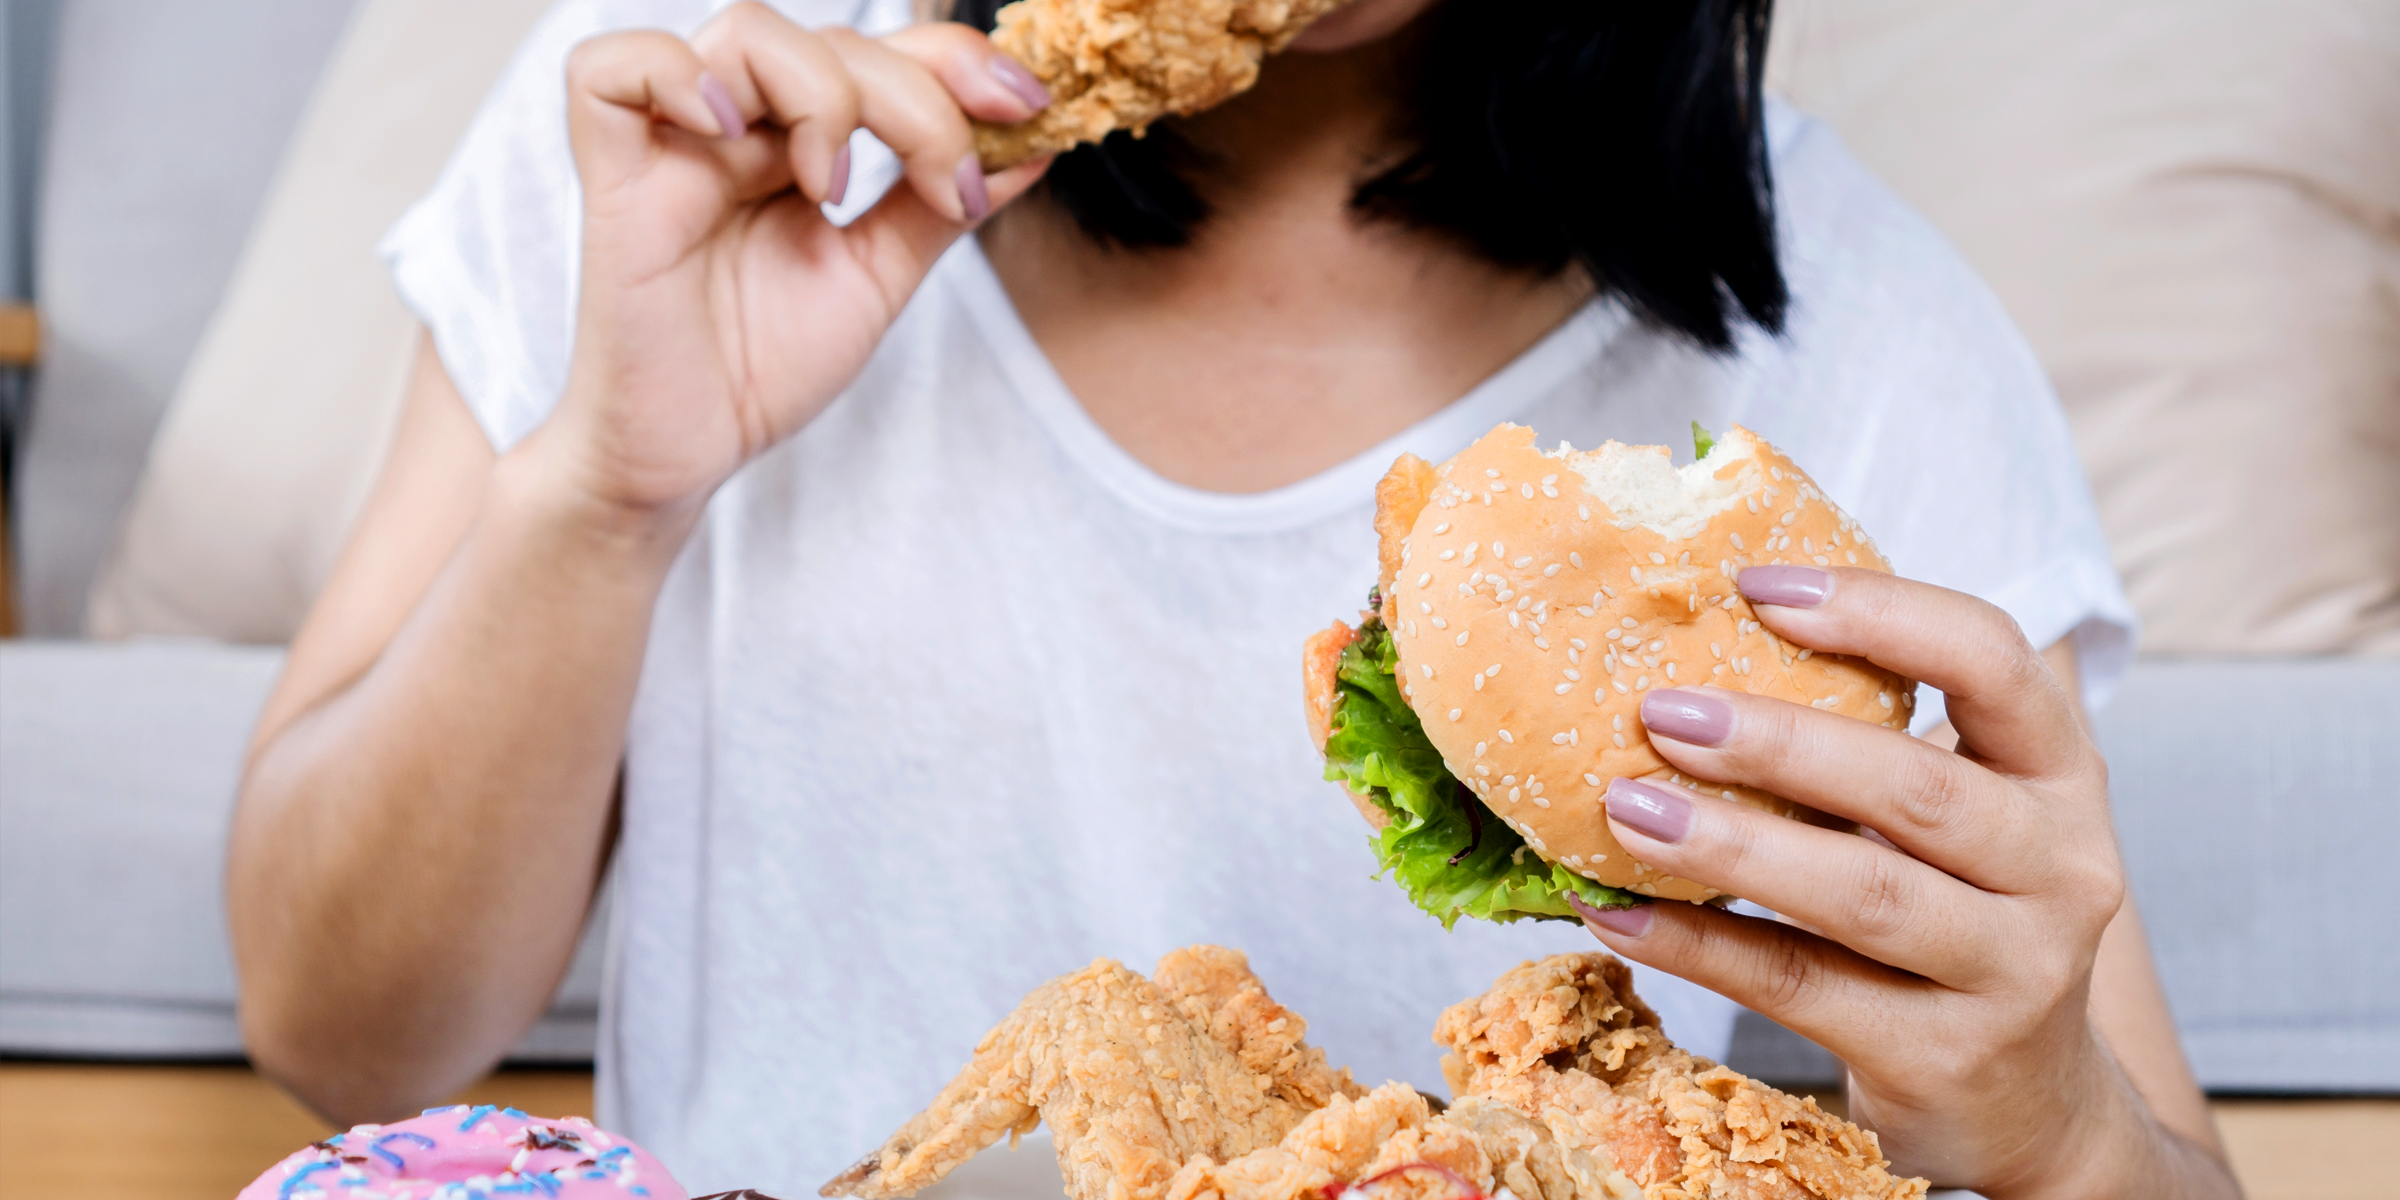 Alguien comiendo una hamburguesa | Foto: Shutterstock